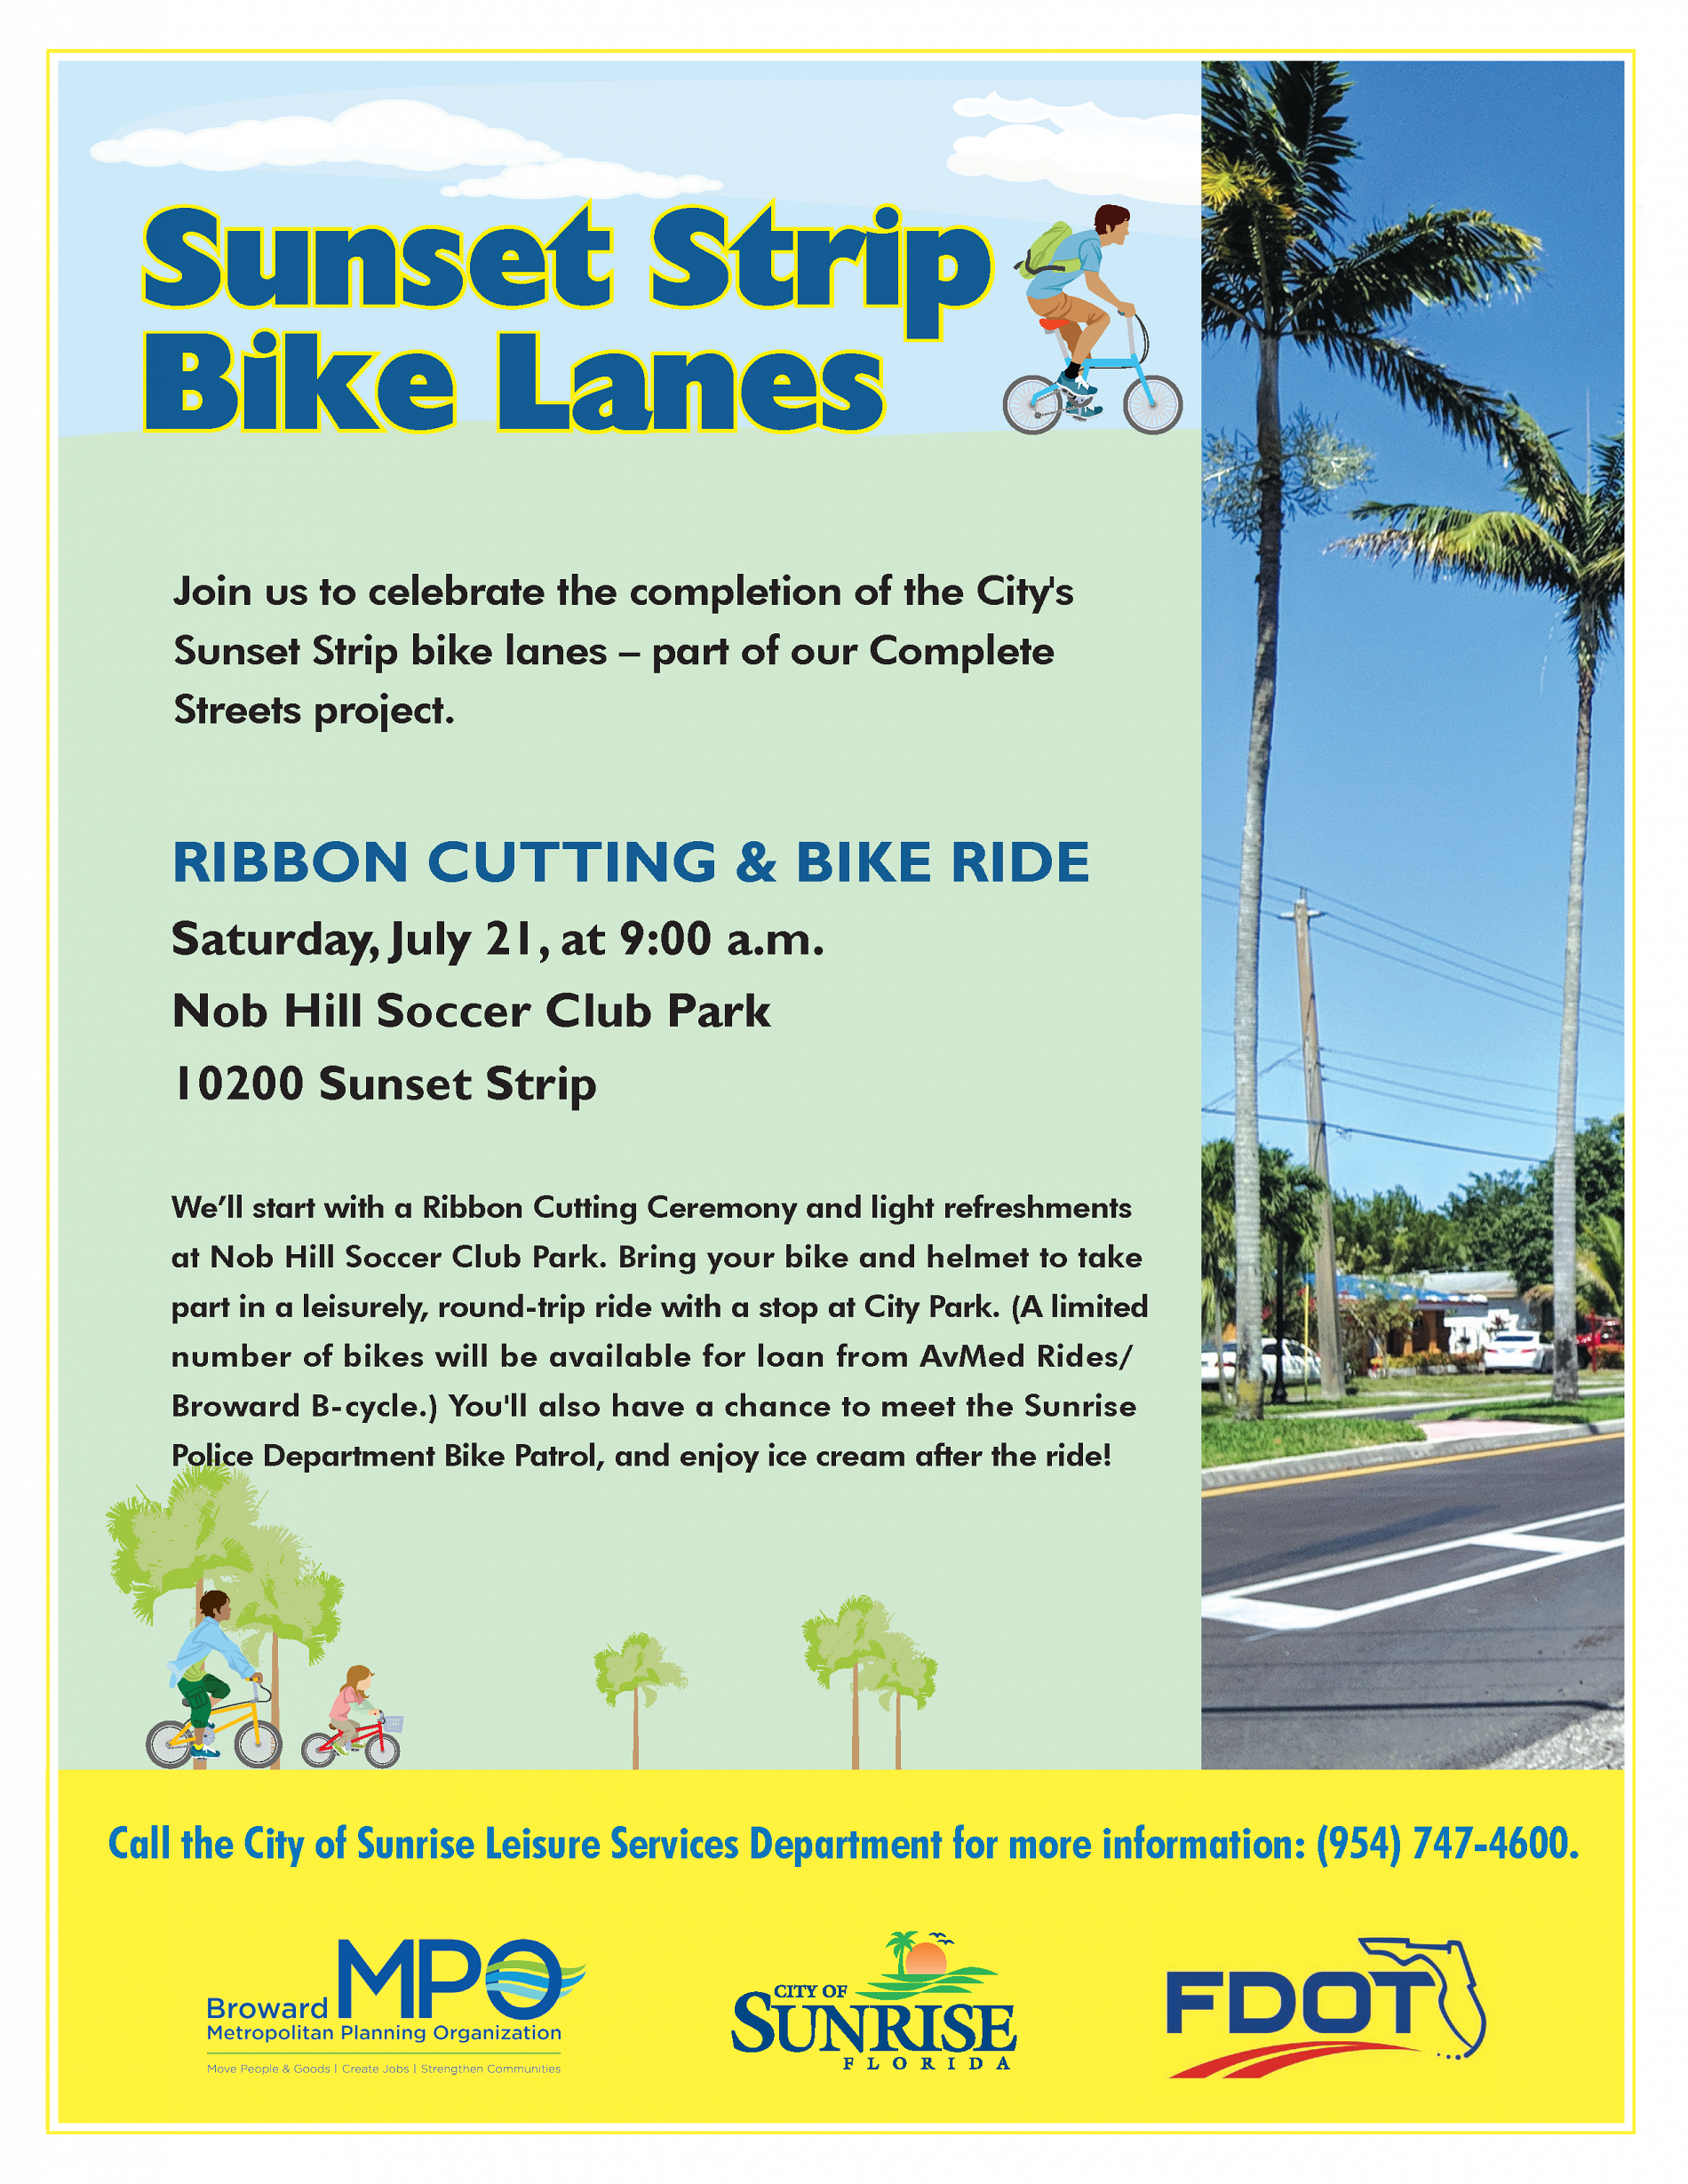 20180713 Sunset Strip Bike Lane Ribbon Cutting Flyer